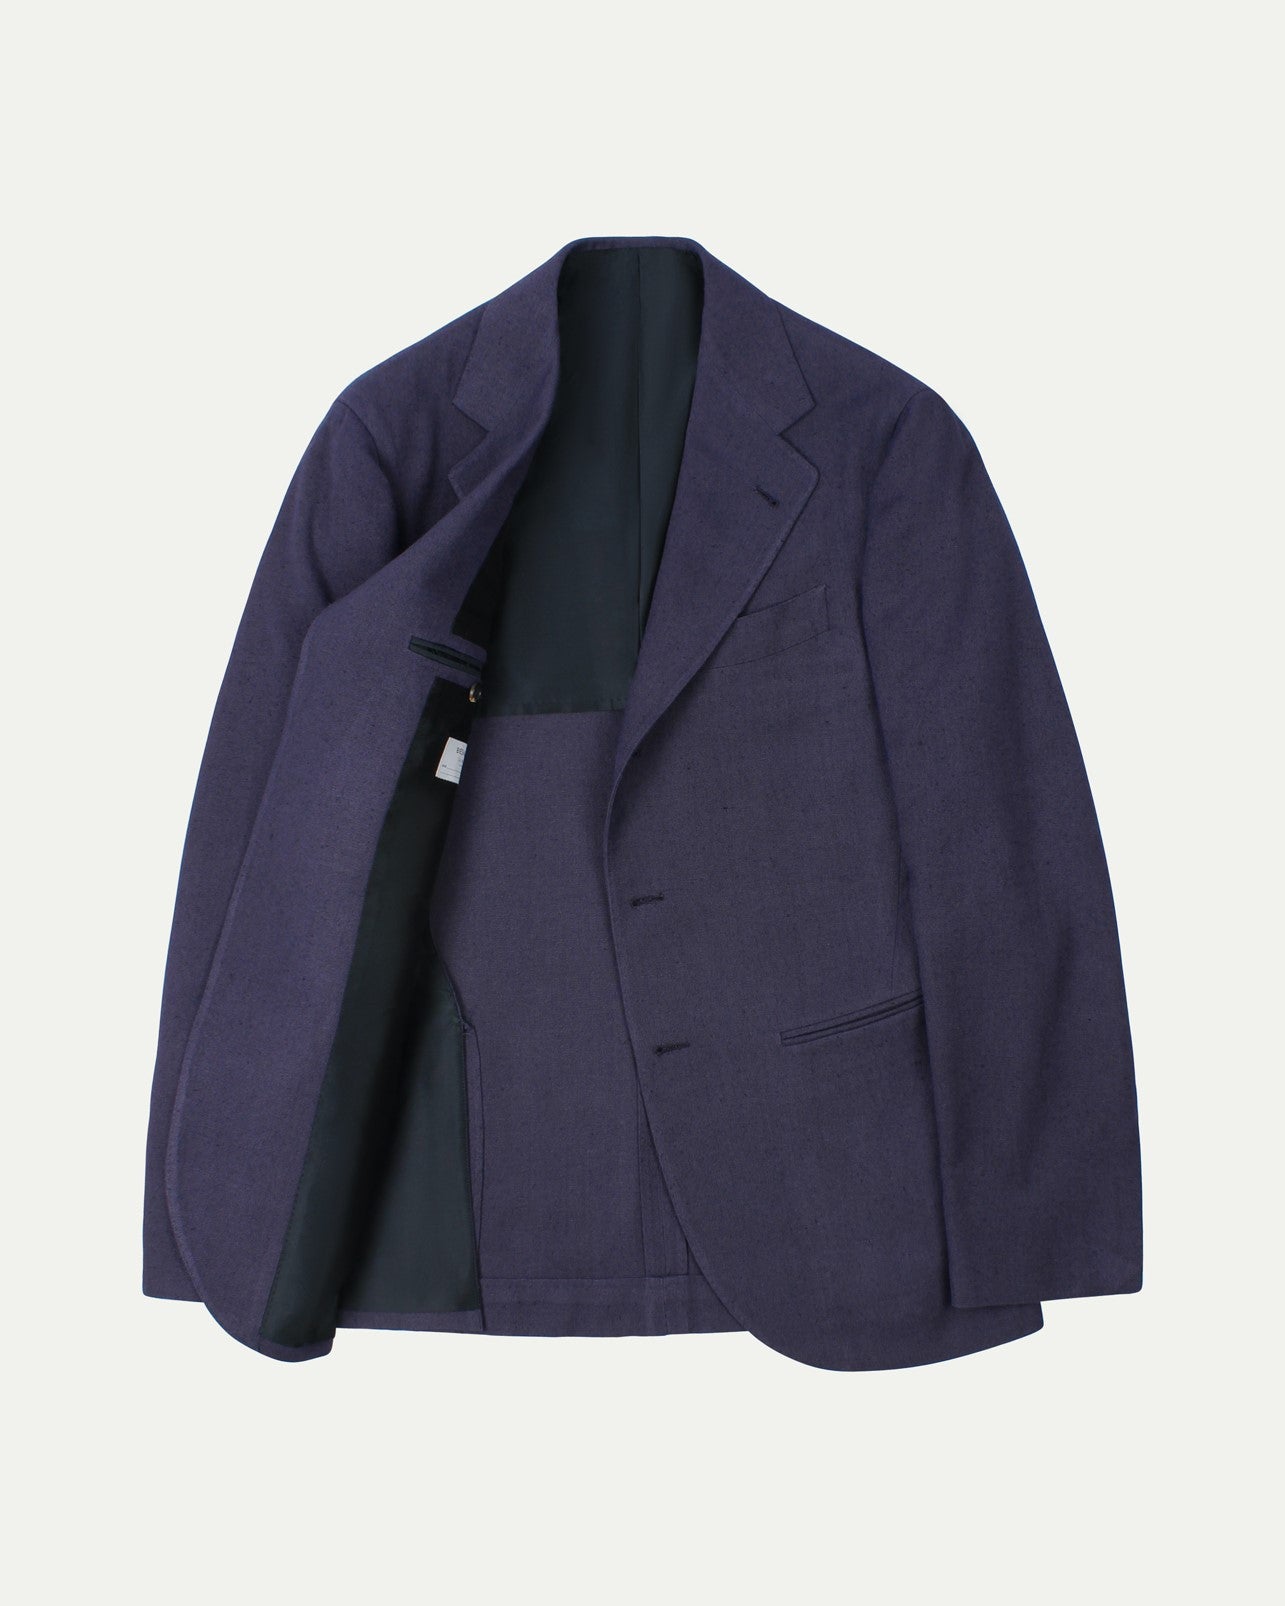 Made-To-Order Sport Coat Indigo Silk